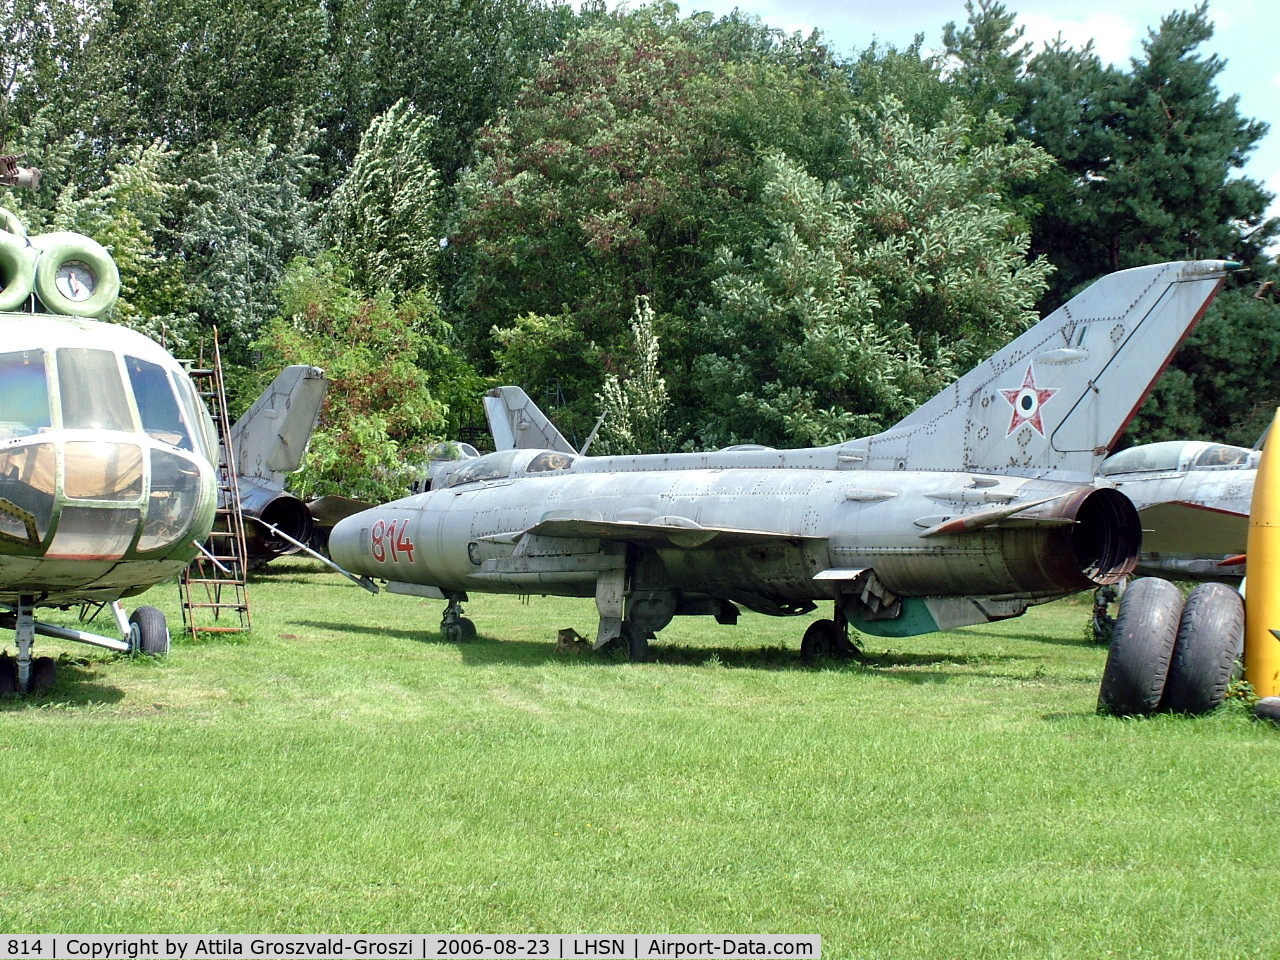 814, 1962 Mikoyan-Gurevich MiG-21F-13 C/N 741814, LHSN - Szolnok Air Base Musum, Hungary